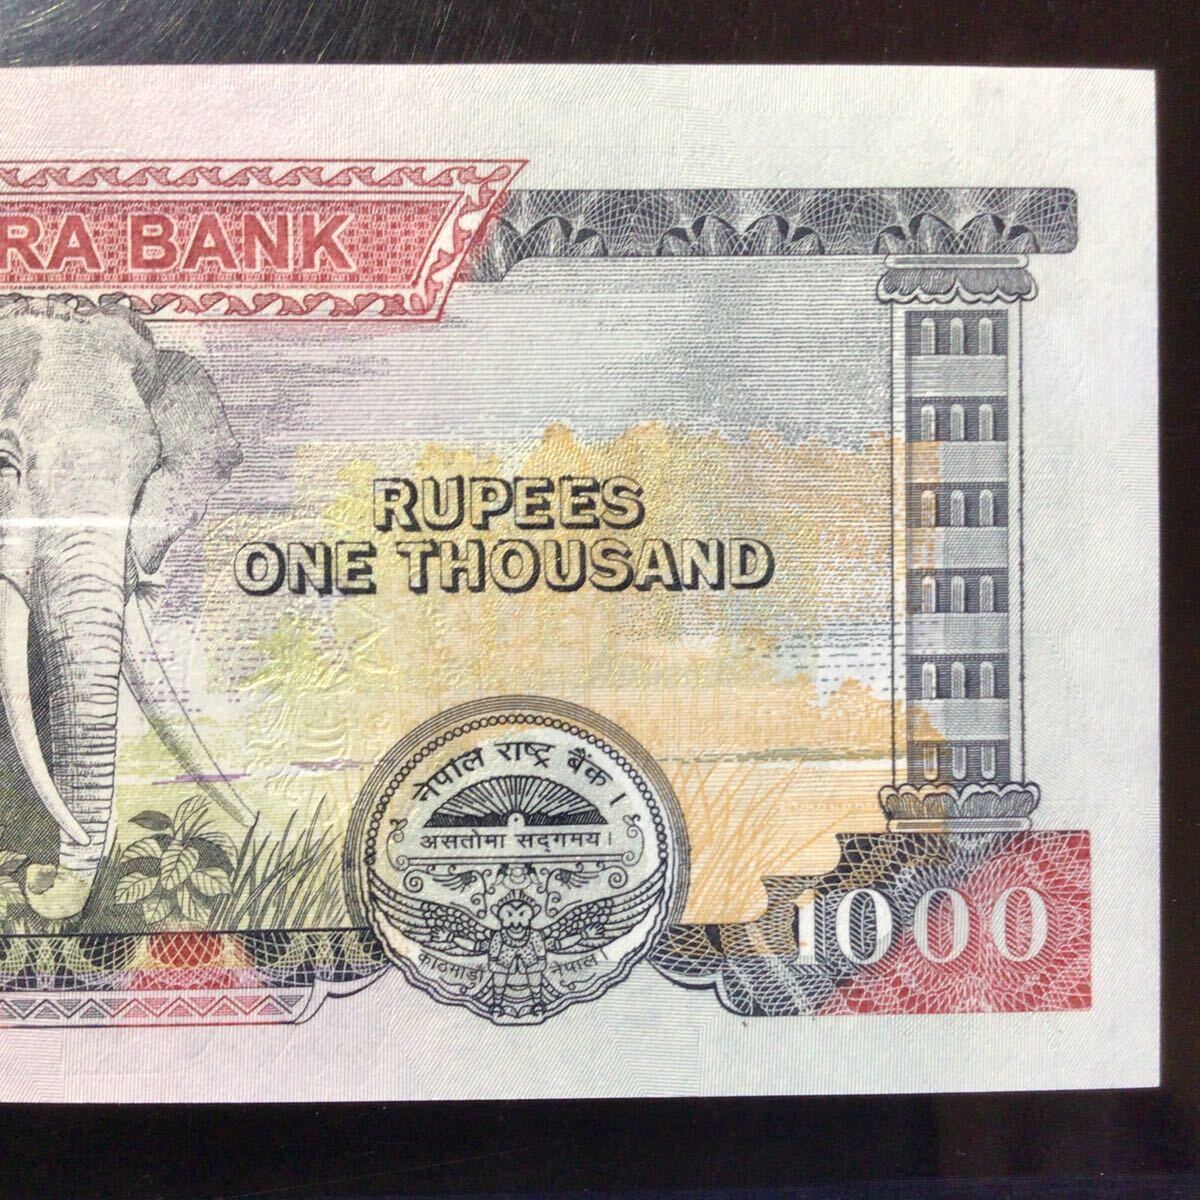 World Banknote Grading NEPAL《Rastra Bank》1000 Rupees【2010】『PMG Grading Choice Uncirculated 64 EPQ』_画像7